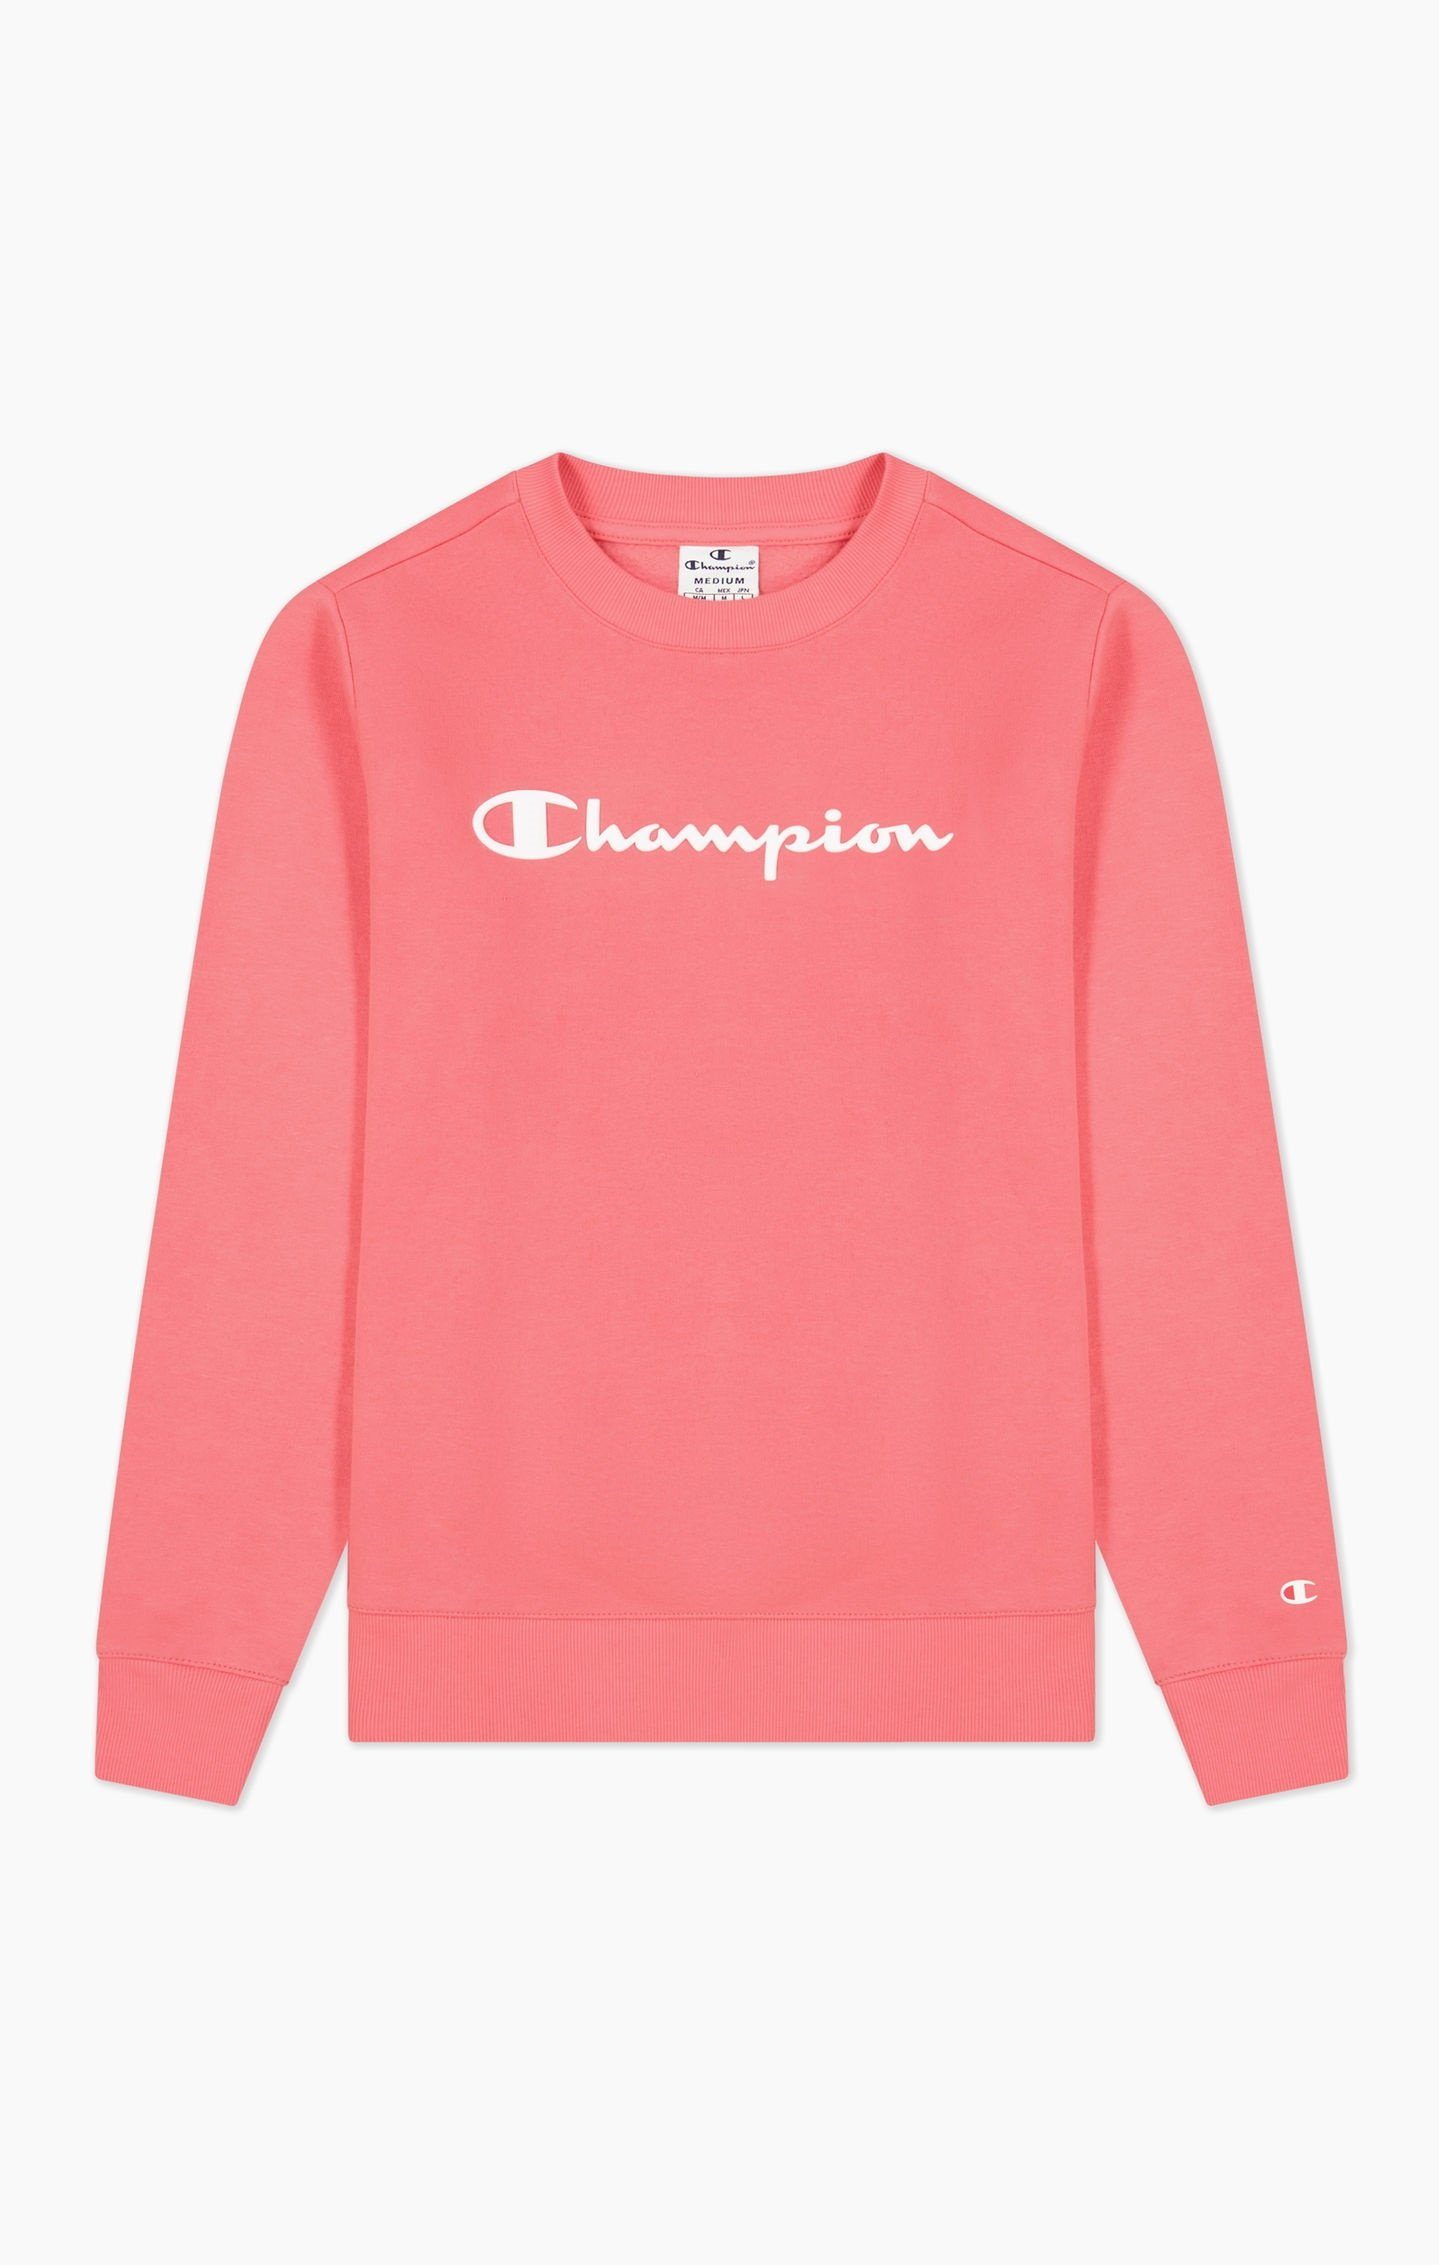 Champion Sweatshirt Pullover Sweatshirt aus Baumwollfleece mit rosa